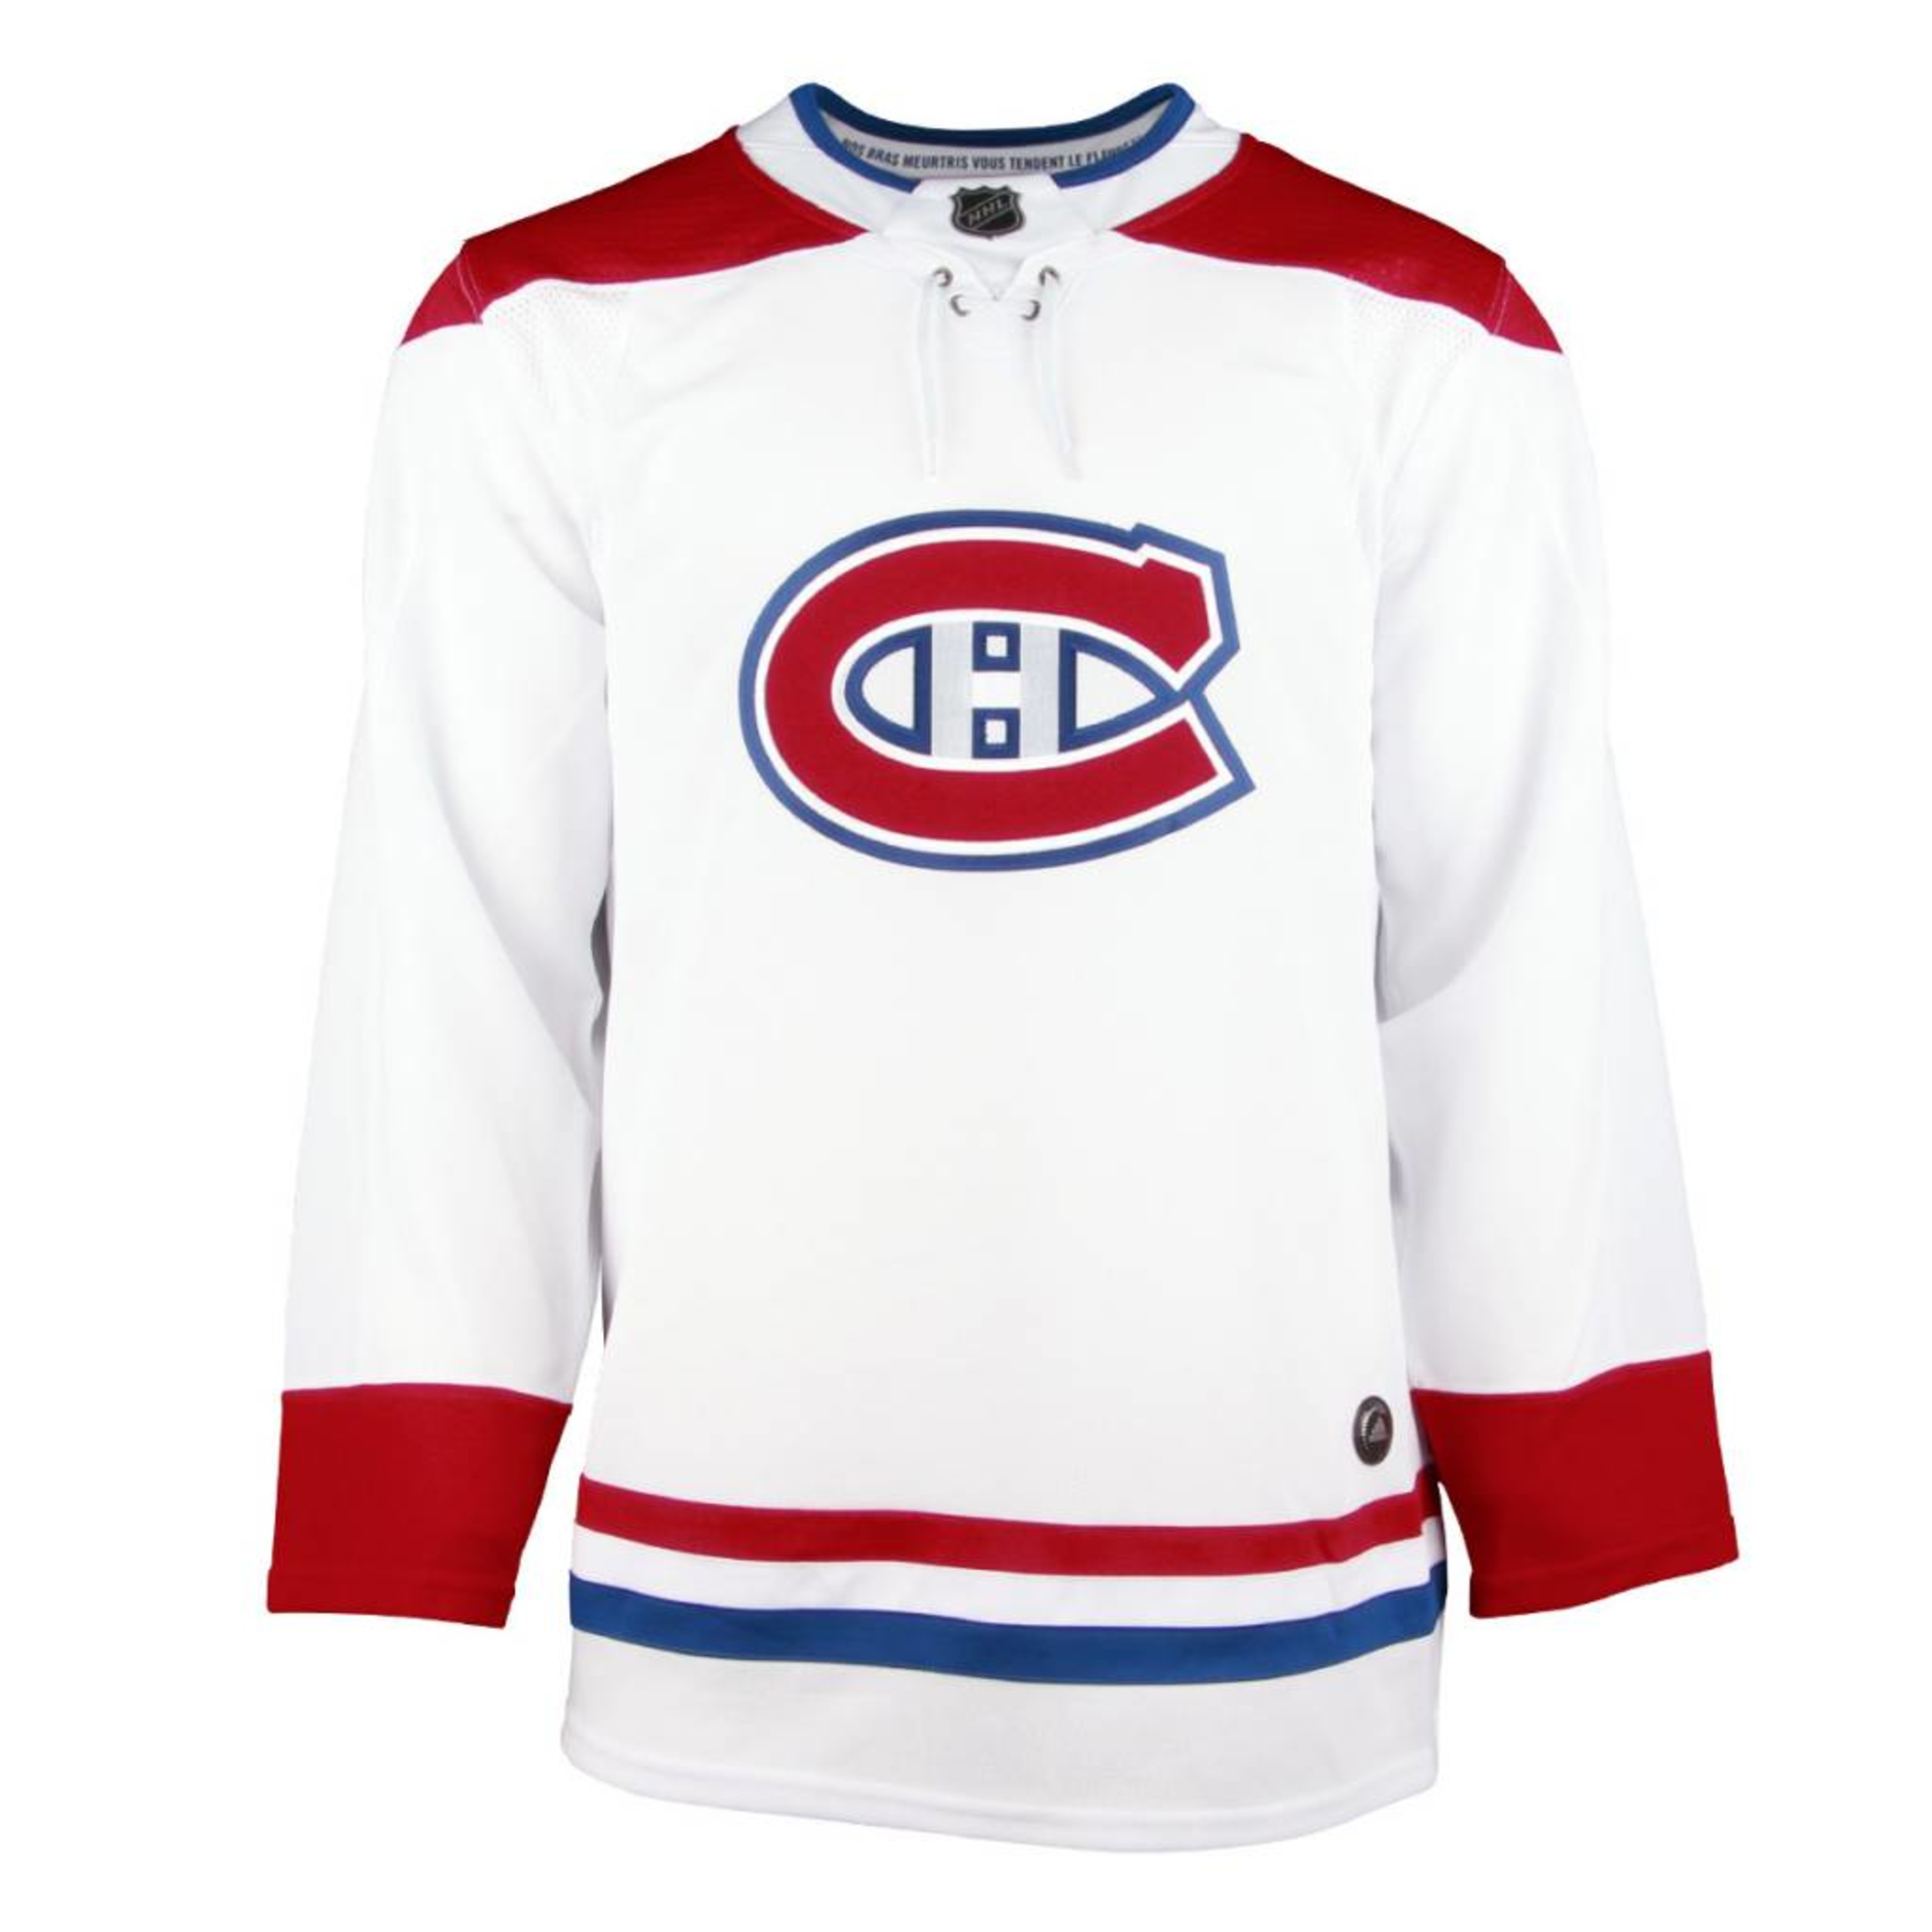 Nick Suzuki Signed 2021 Montreal Canadiens Reverse Retro Adidas Auth. Jersey